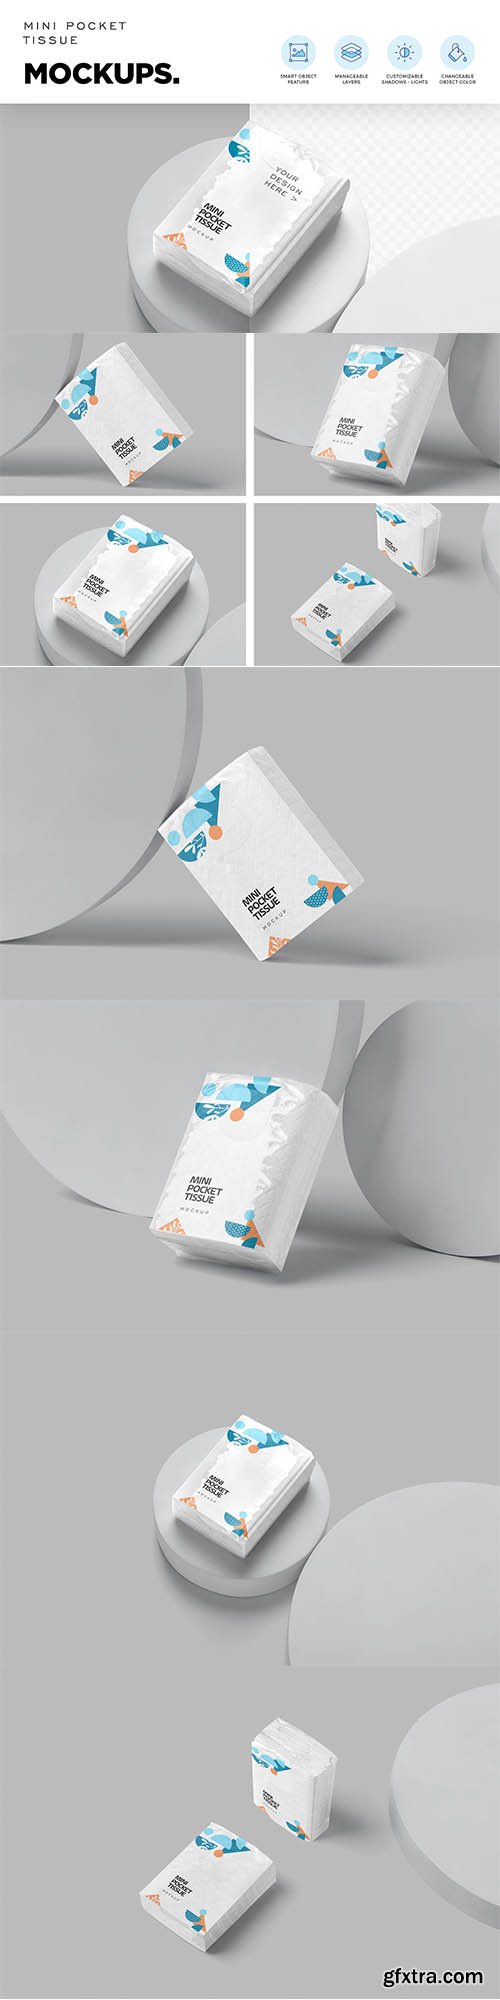 CreativeMarket - Pocket Tissue Pack Mockups 6859920